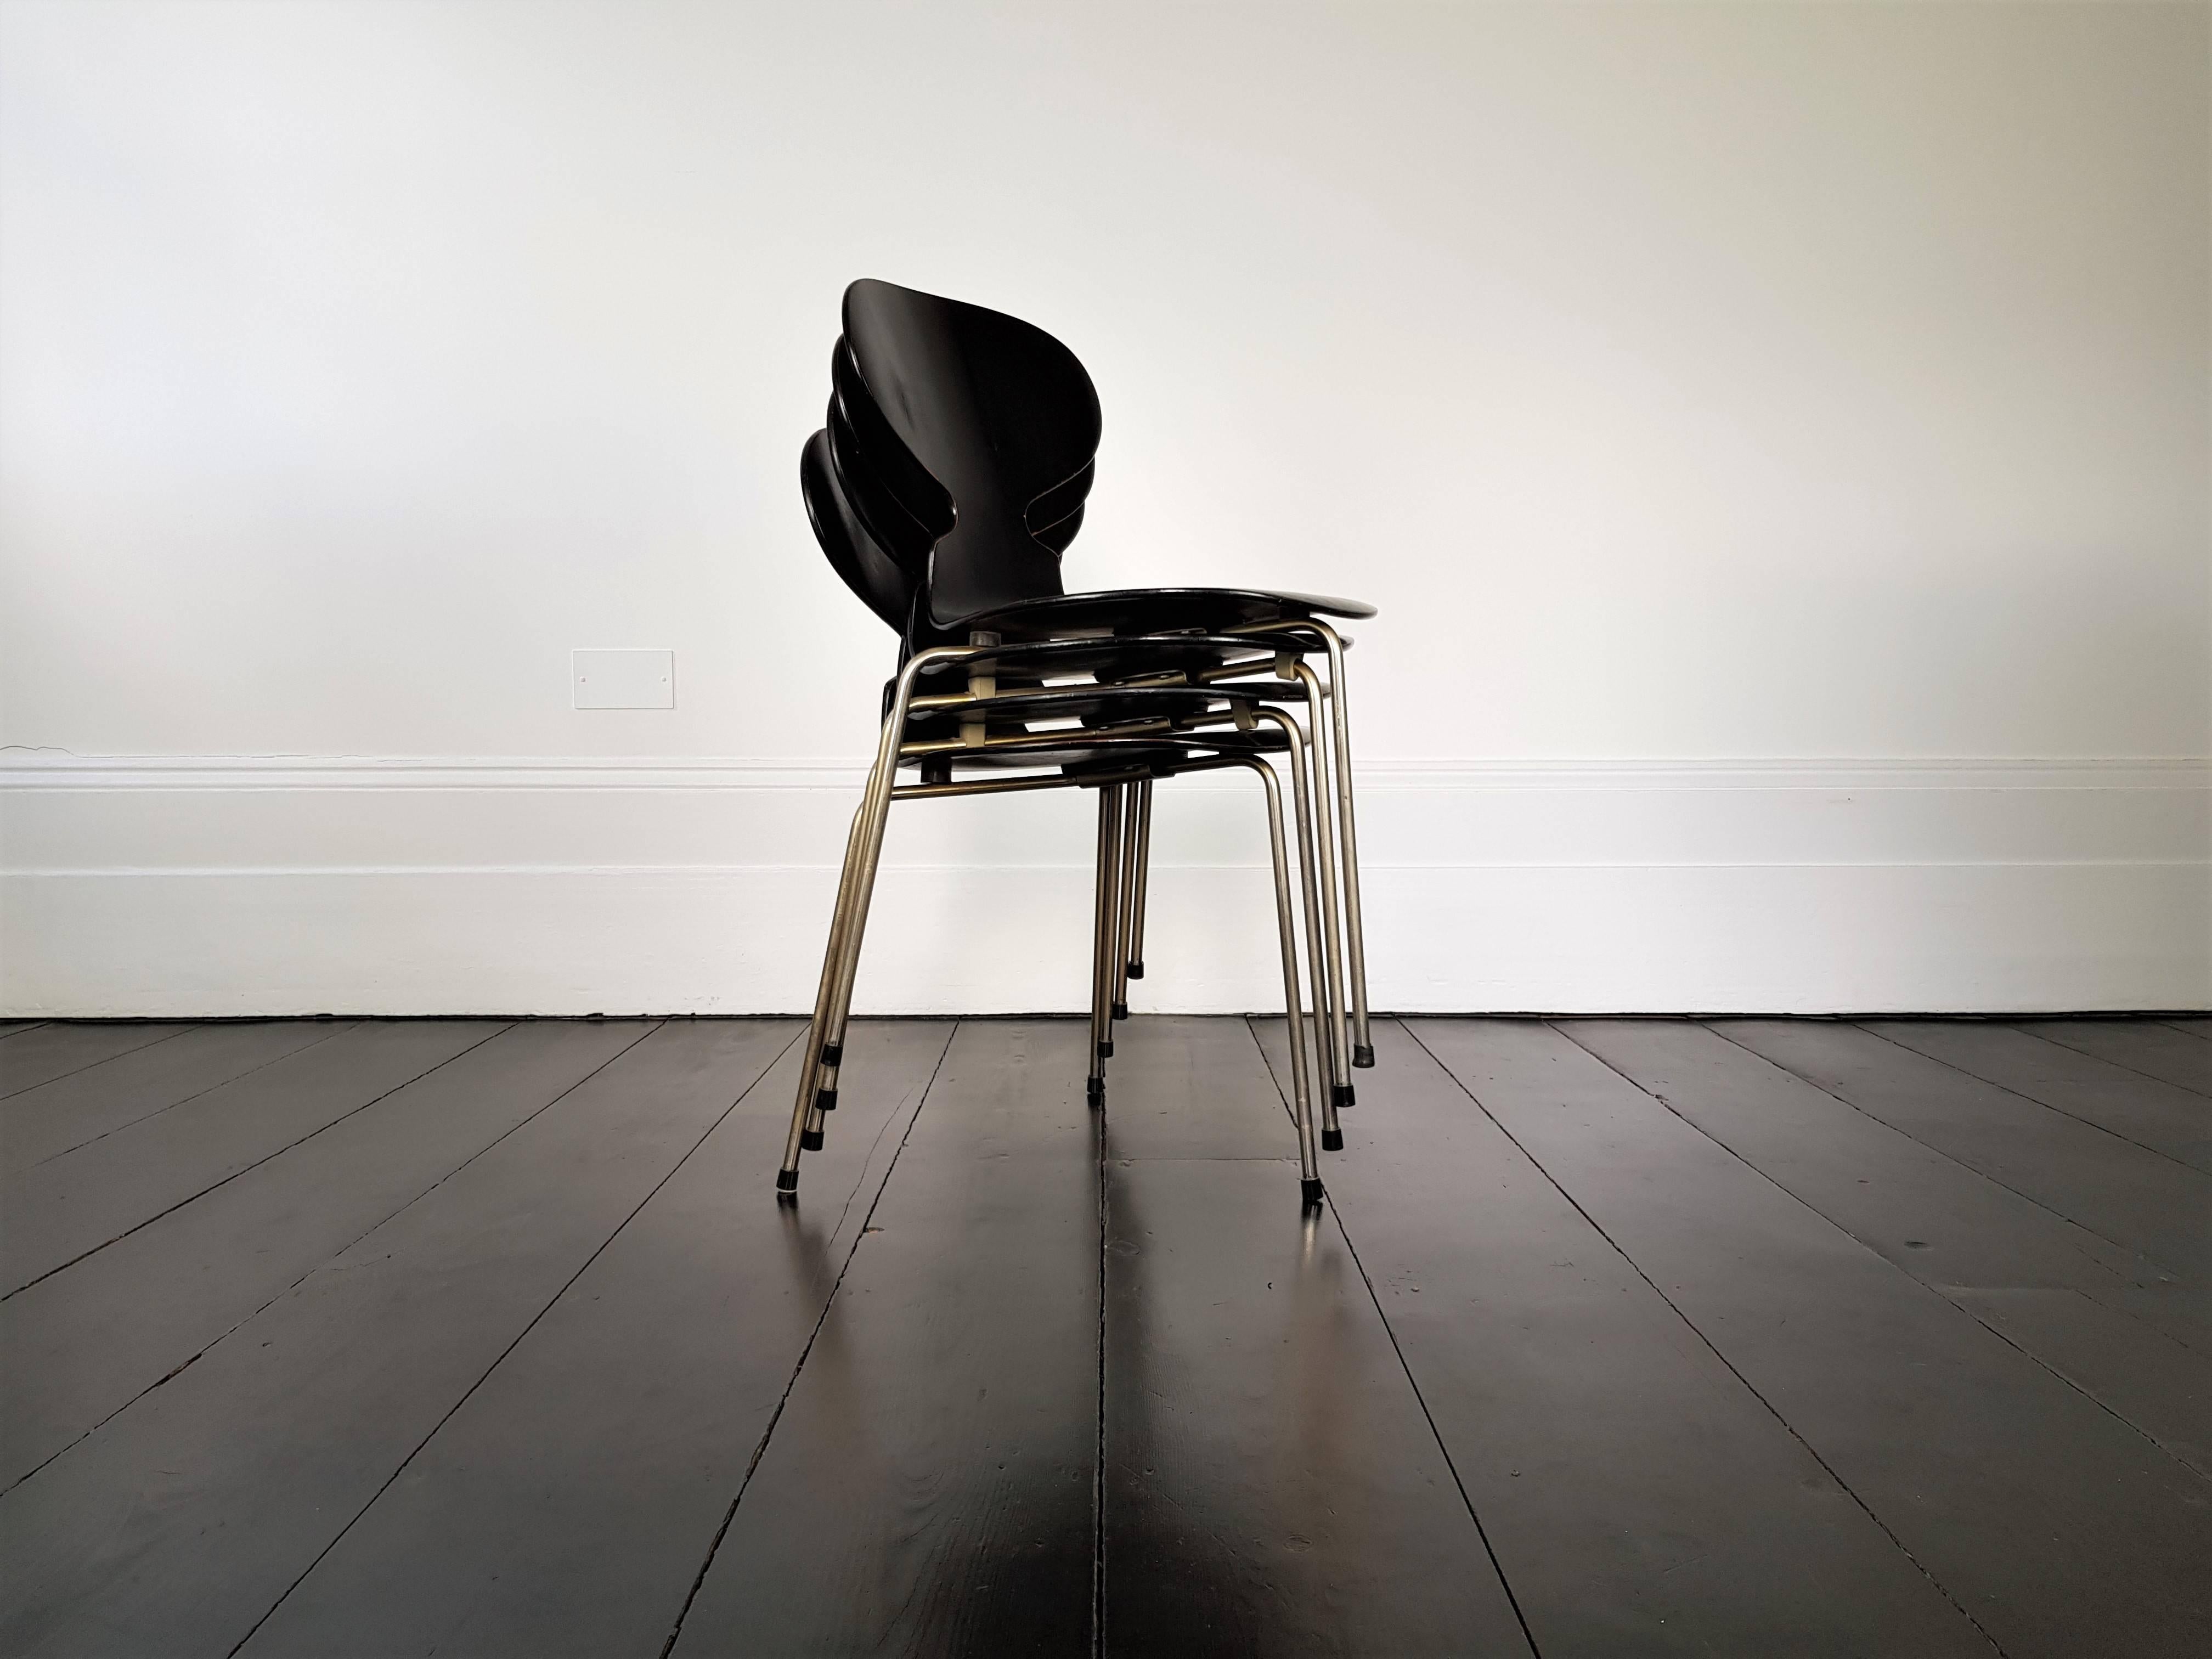 Danish Early Model 3100 'Ant' Chairs by Arne Jacobsen for Fritz Hansen Designed in 1952